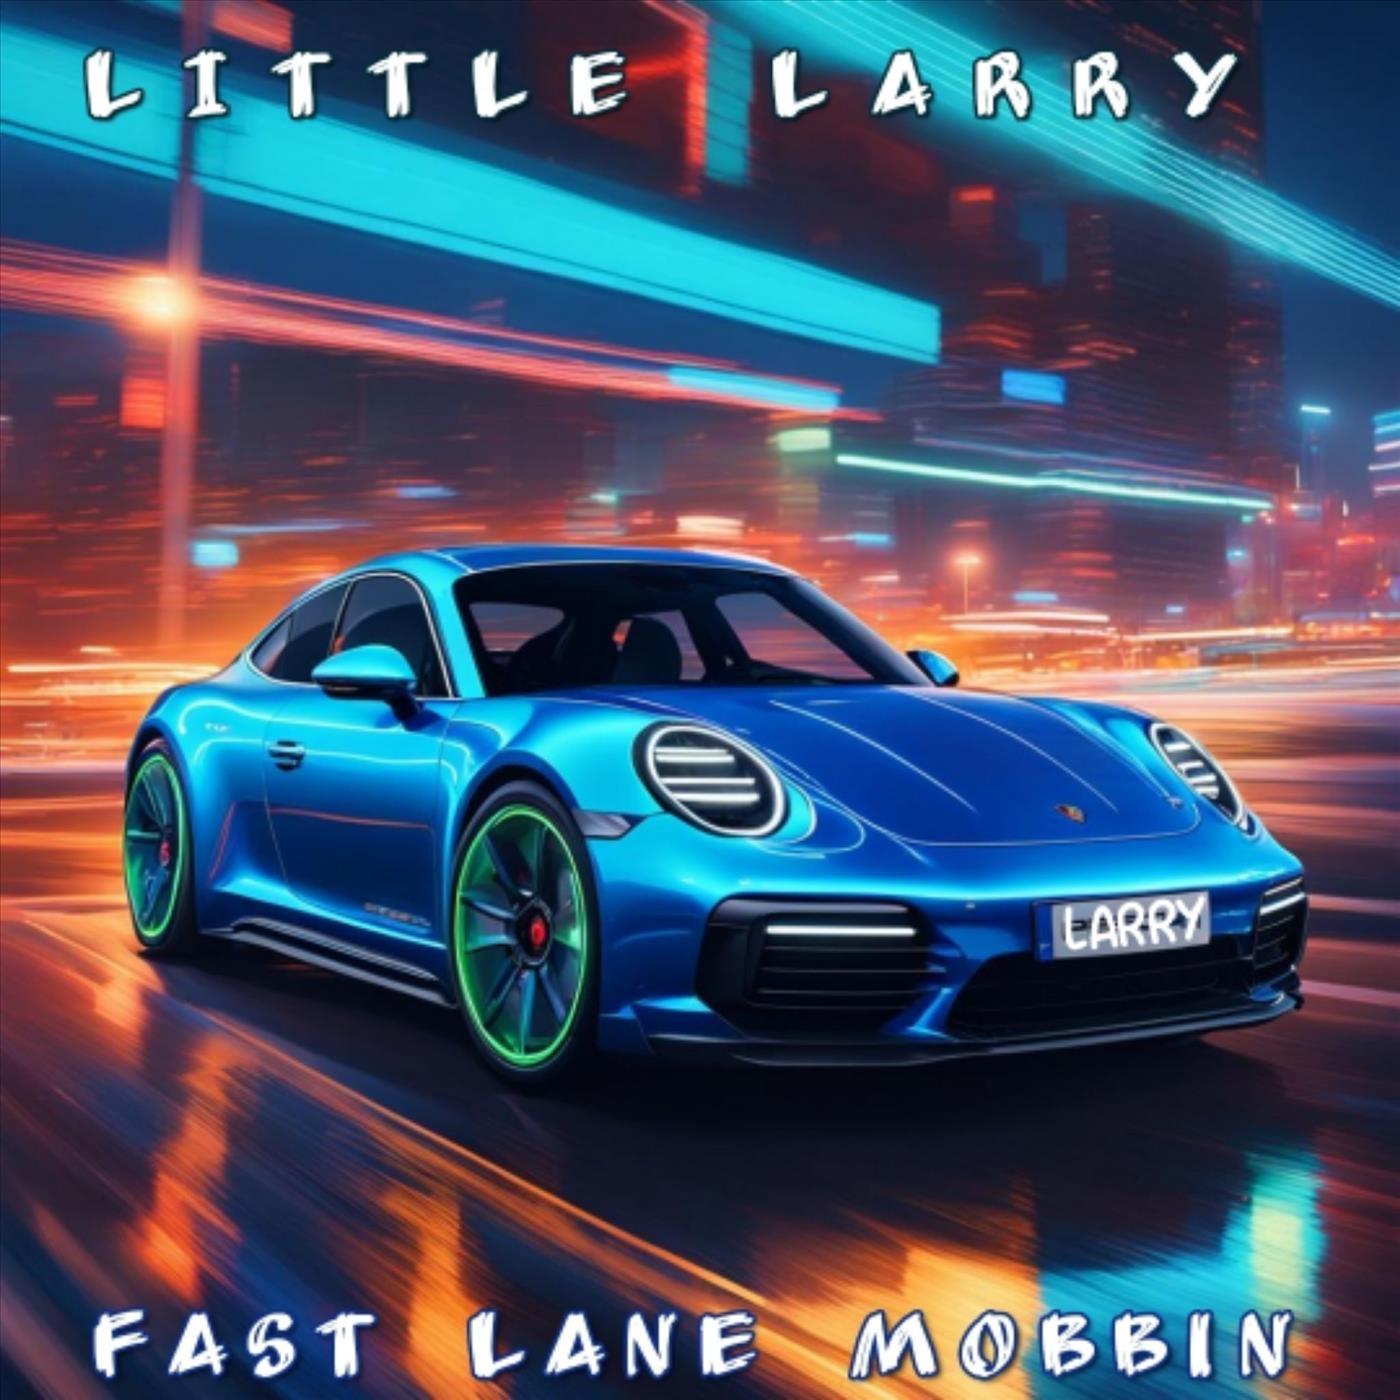 Little Larry - California Cruising